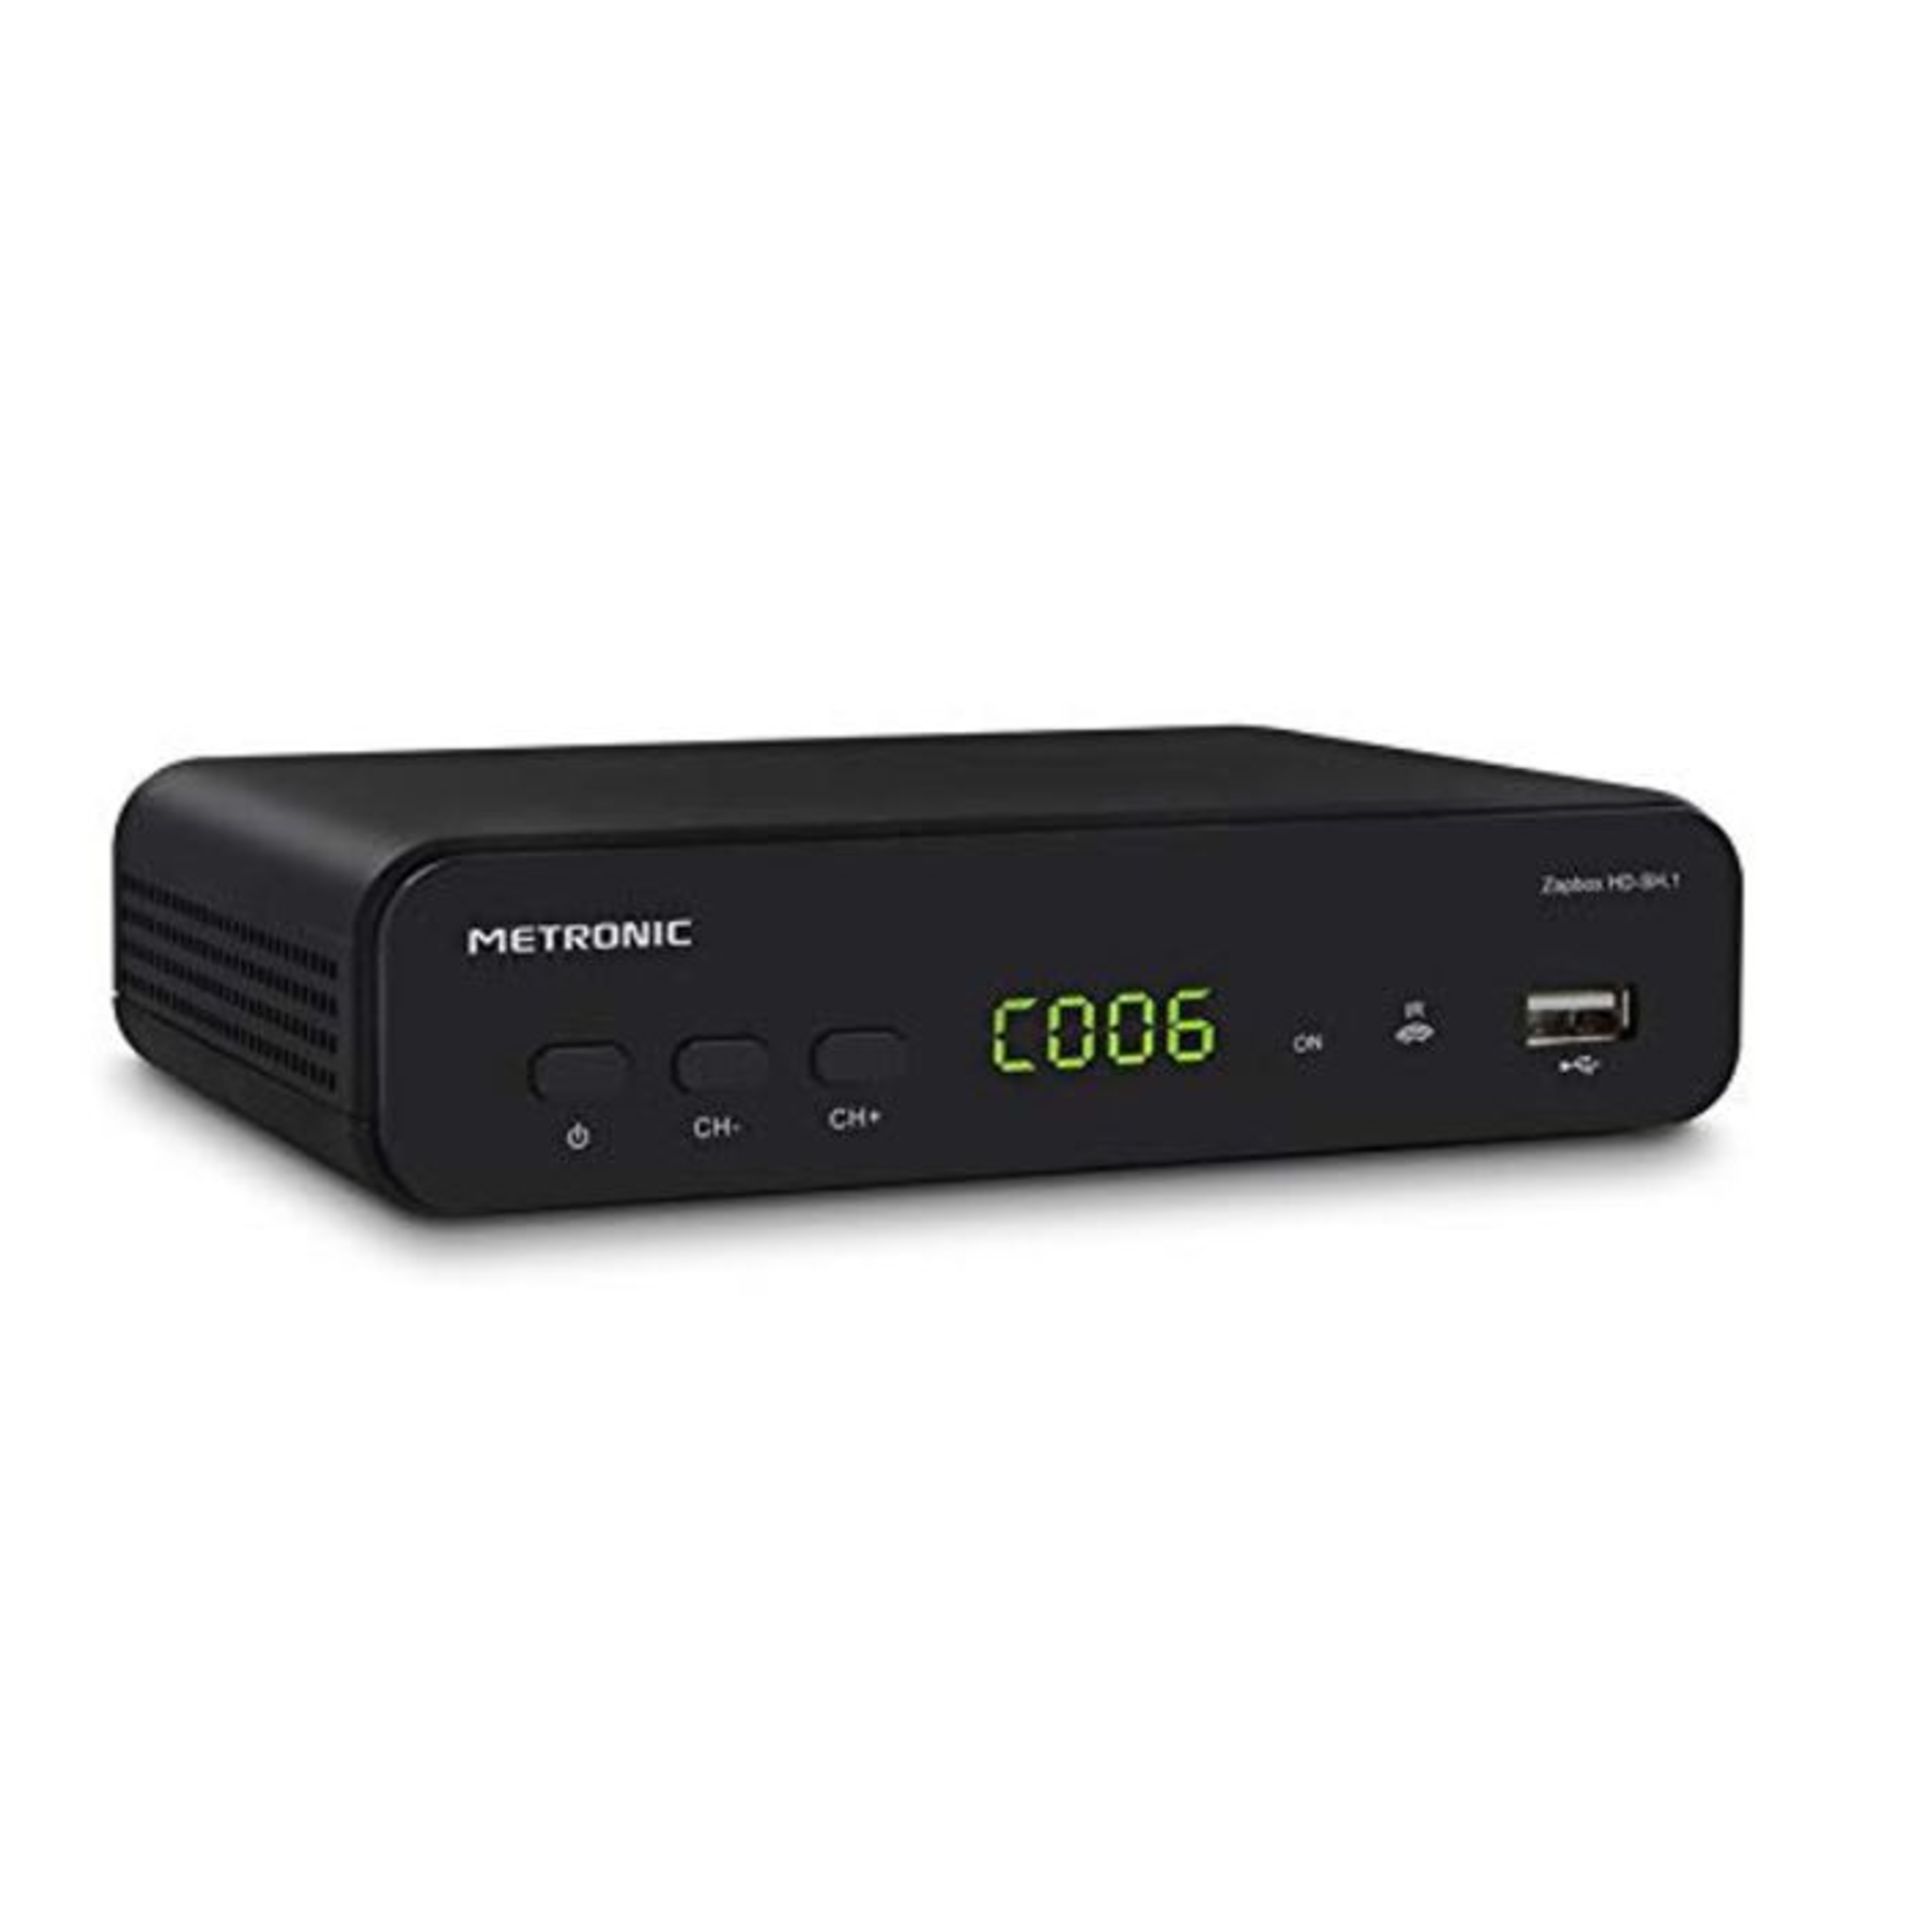 Metronic 441624 - Zapbox HD-SH.1 Ricevitore TDT DVB-T2 HEVC, funzione PVR, prese USB,